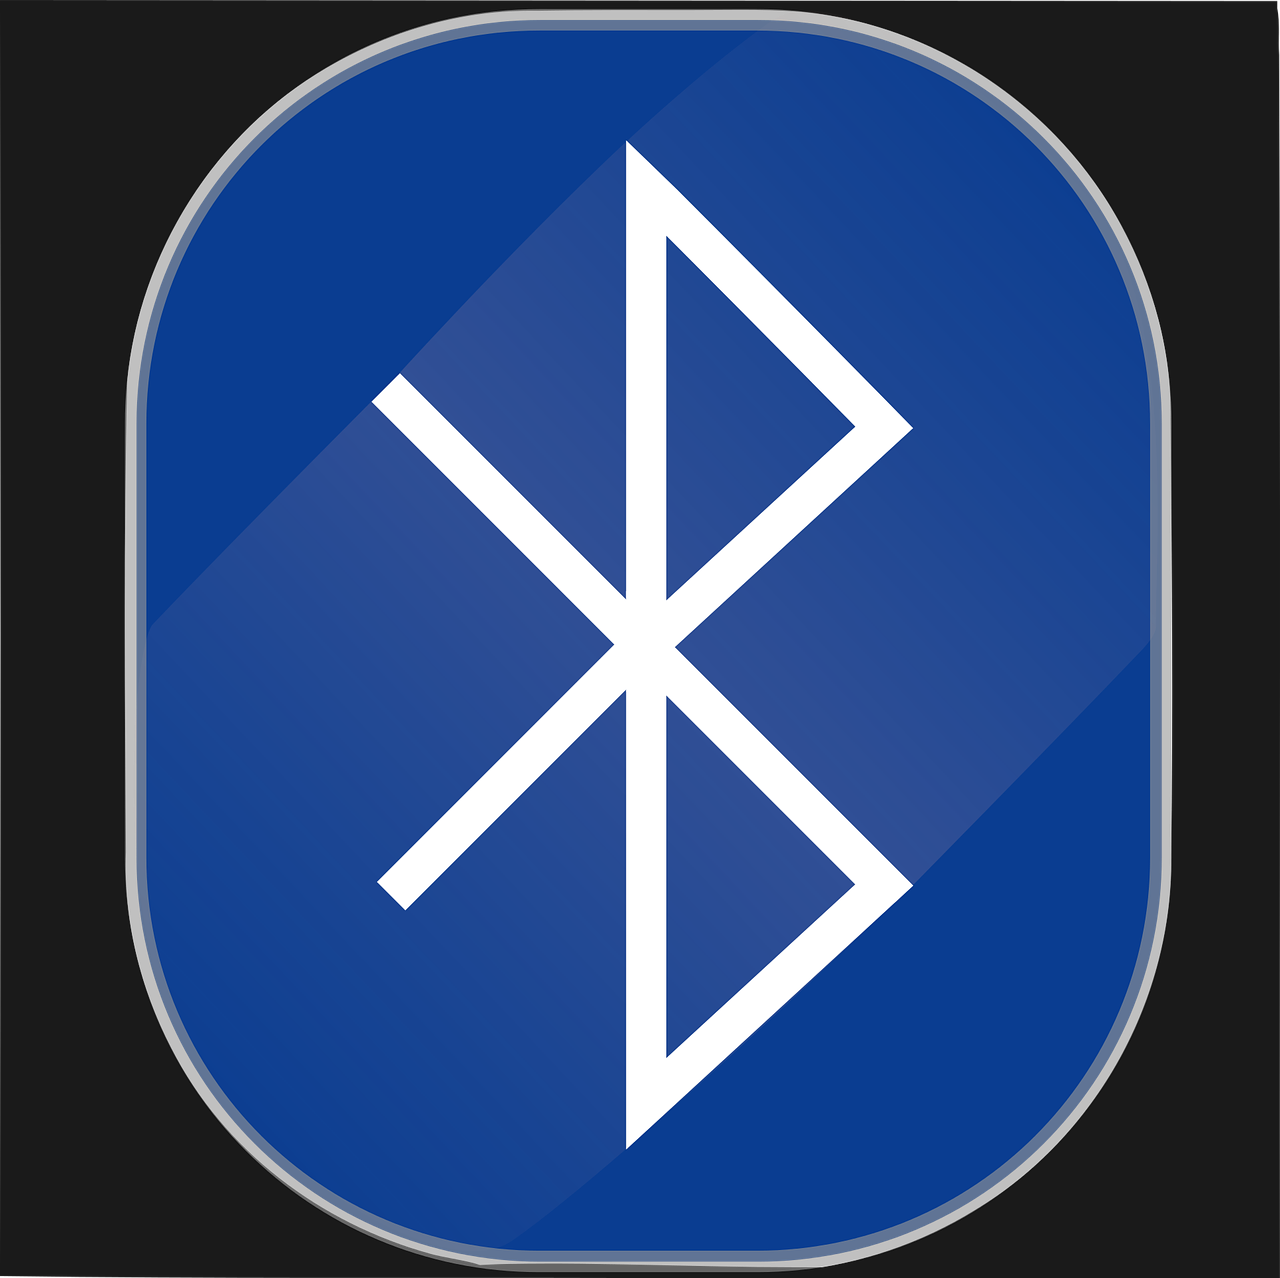 Bluetooth,wireless,bluetooth icon,bluetooth logo,connection - free image from needpix.com